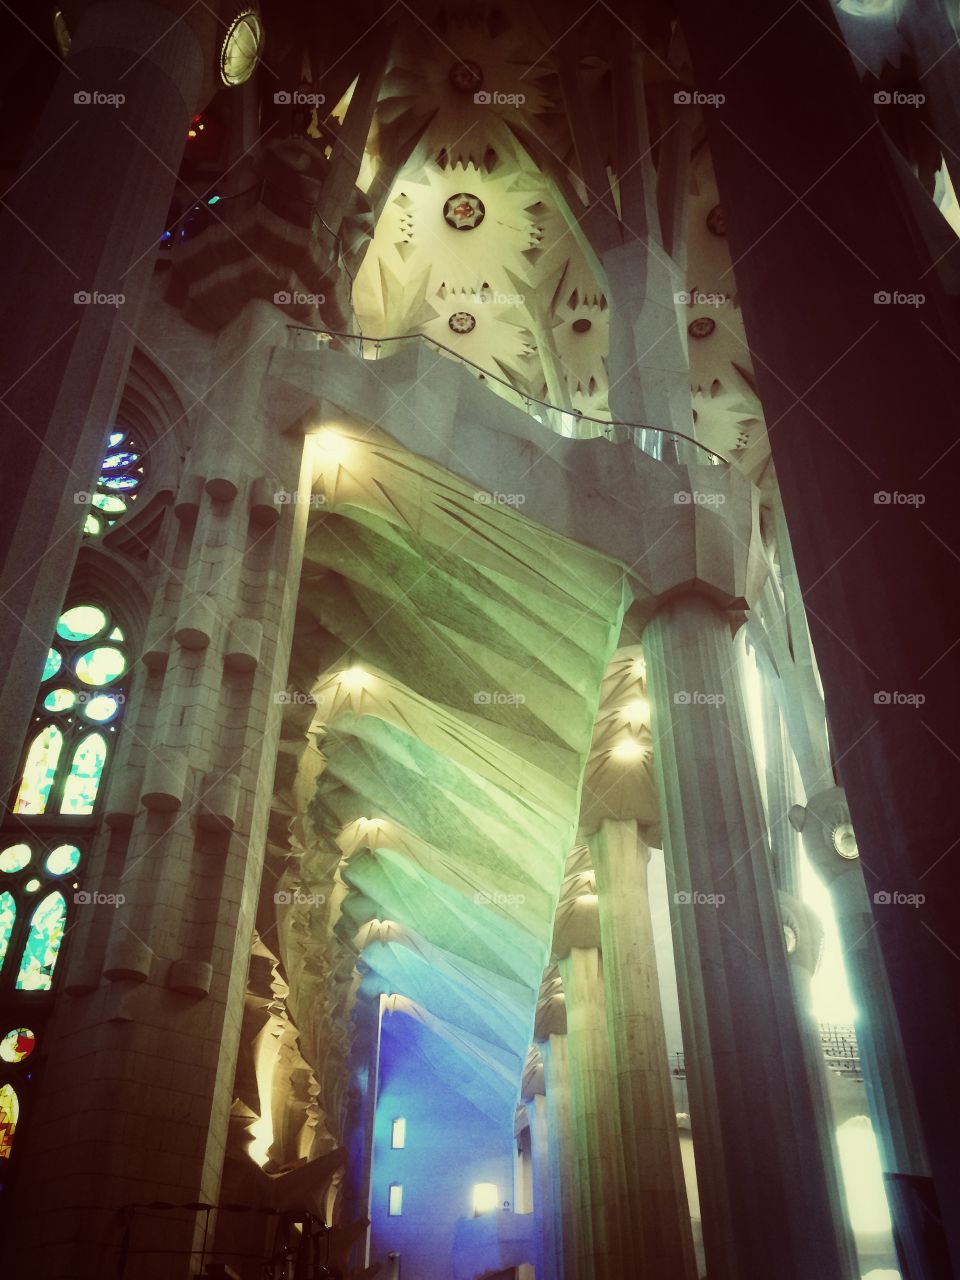 Antoni Gaudí - Sagrada Família: Ceiling